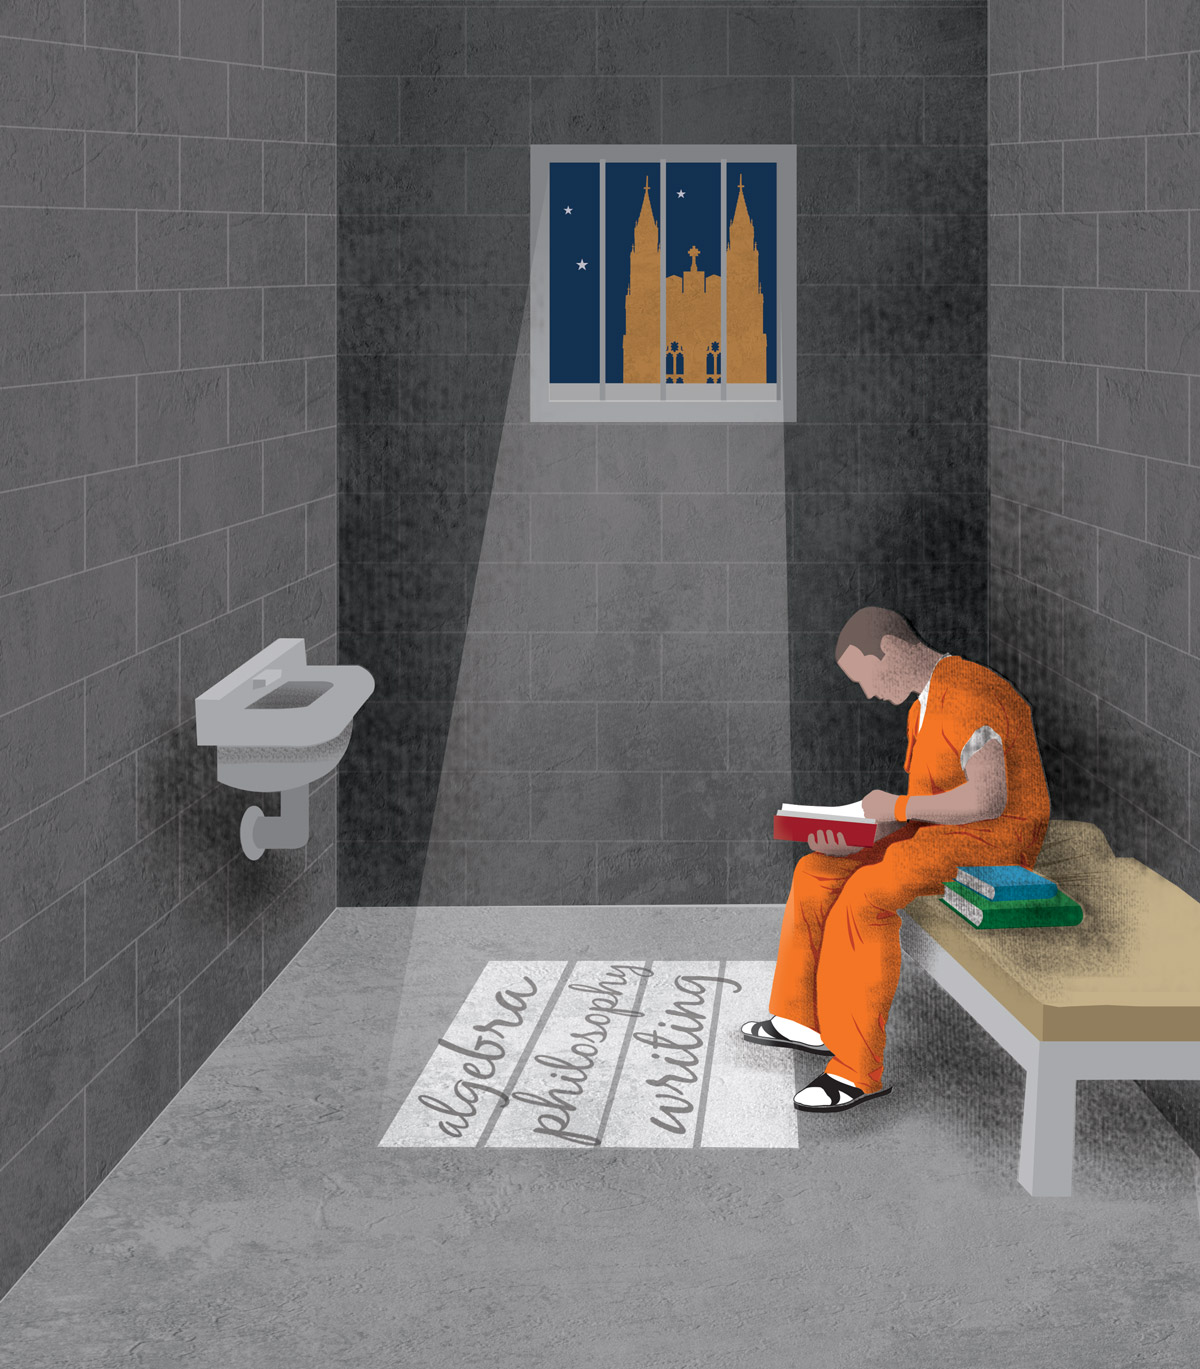 Graphic of Prisoner